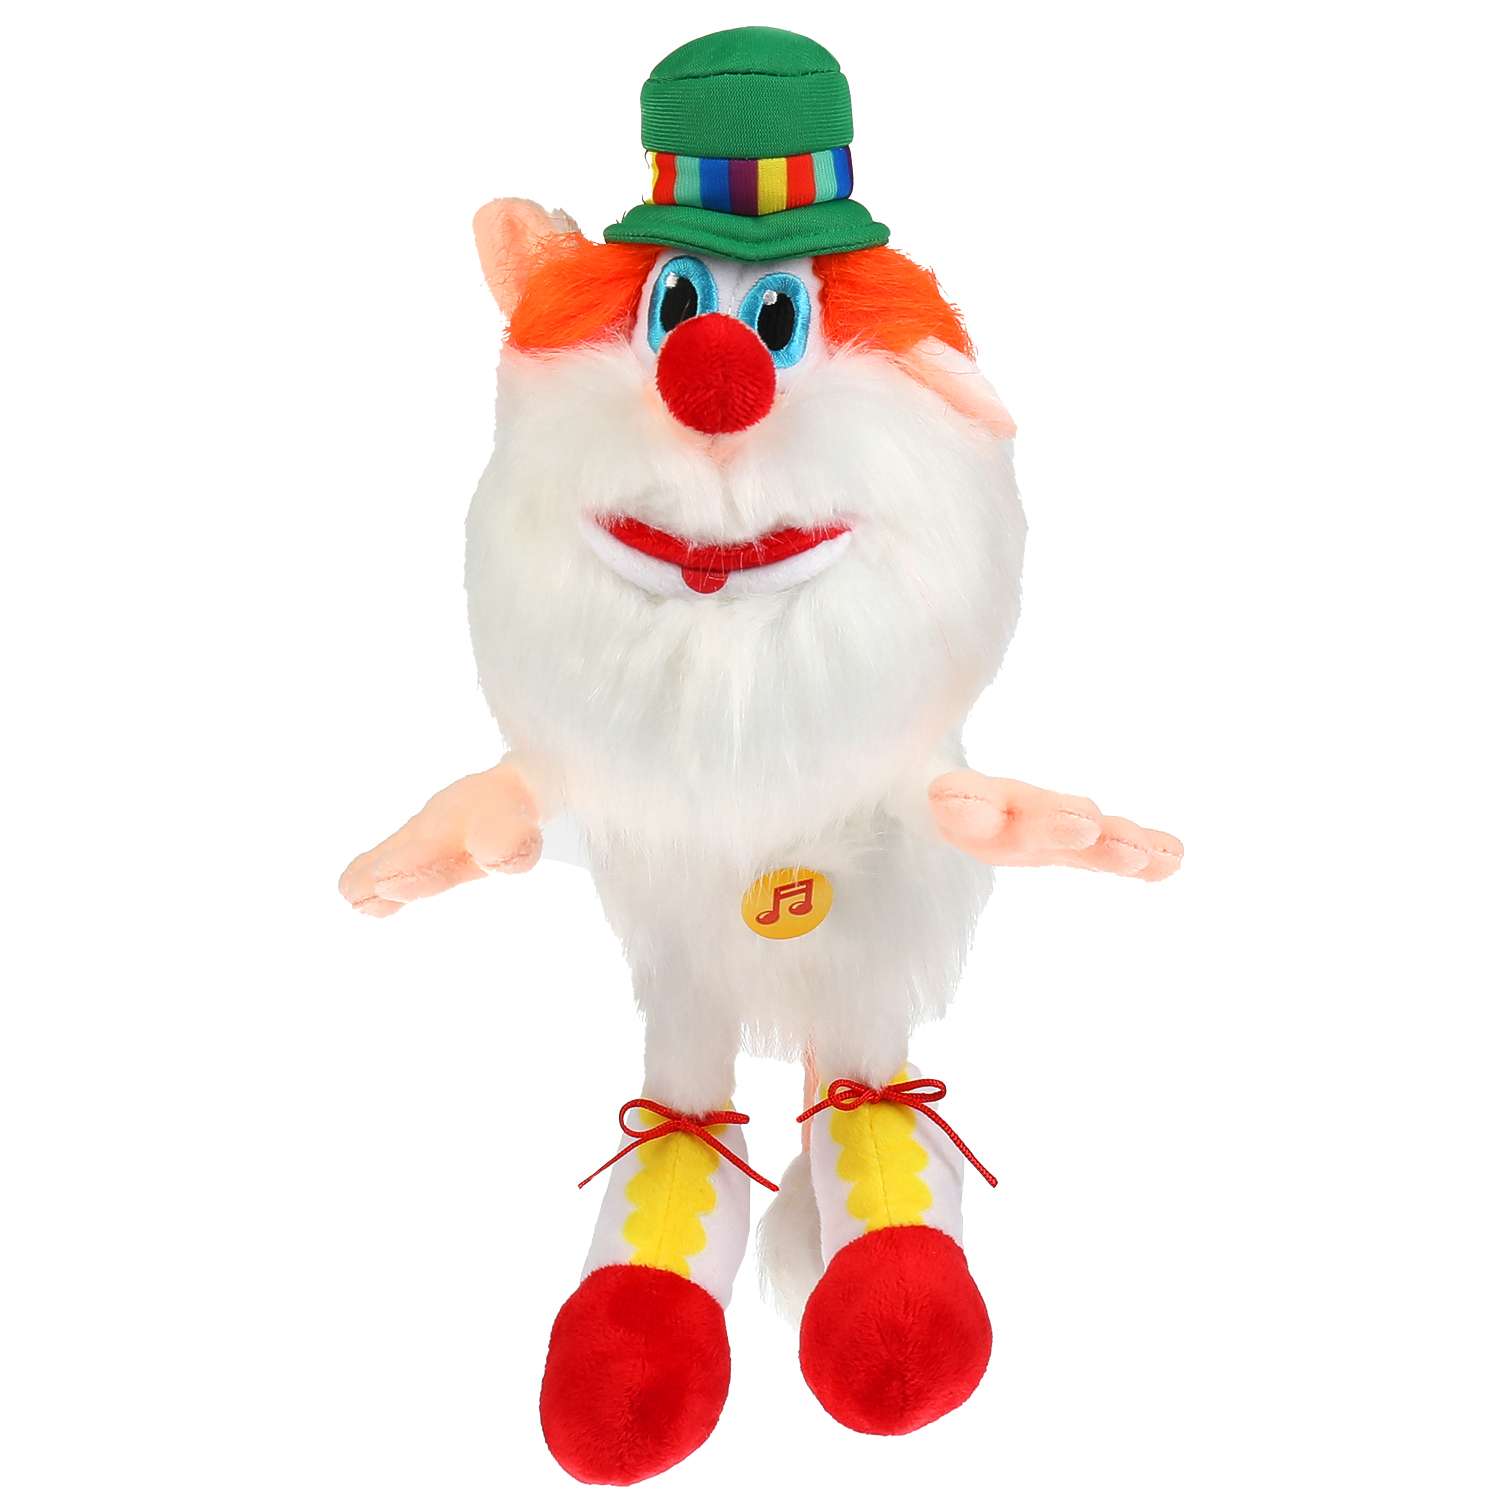 Мягкая игрушка Рыба-клоун, 25 см